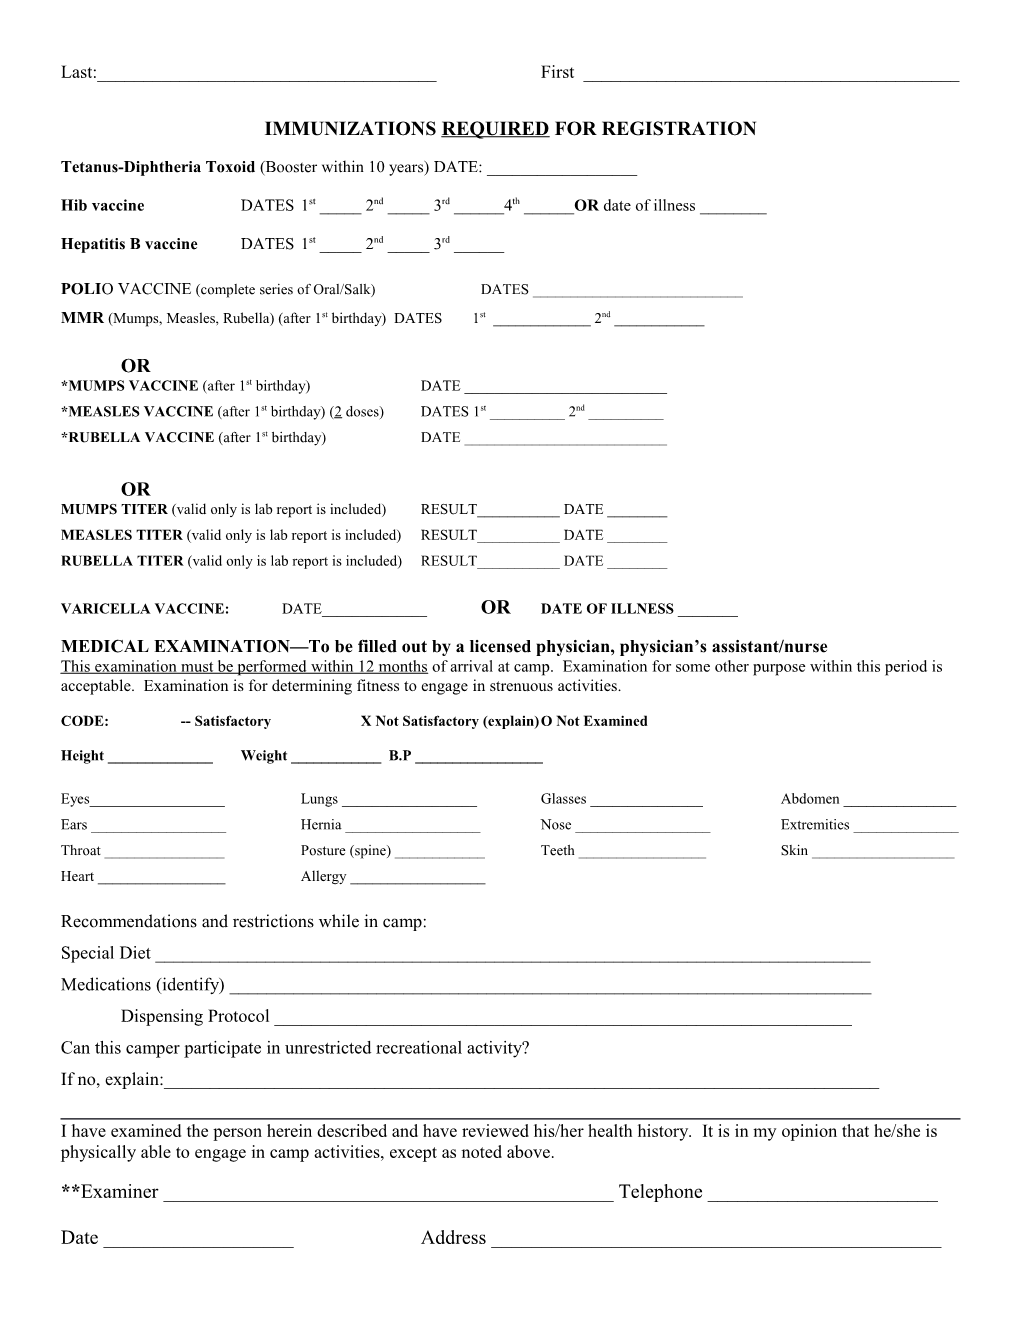 Basketball Camp Health Form Checklist